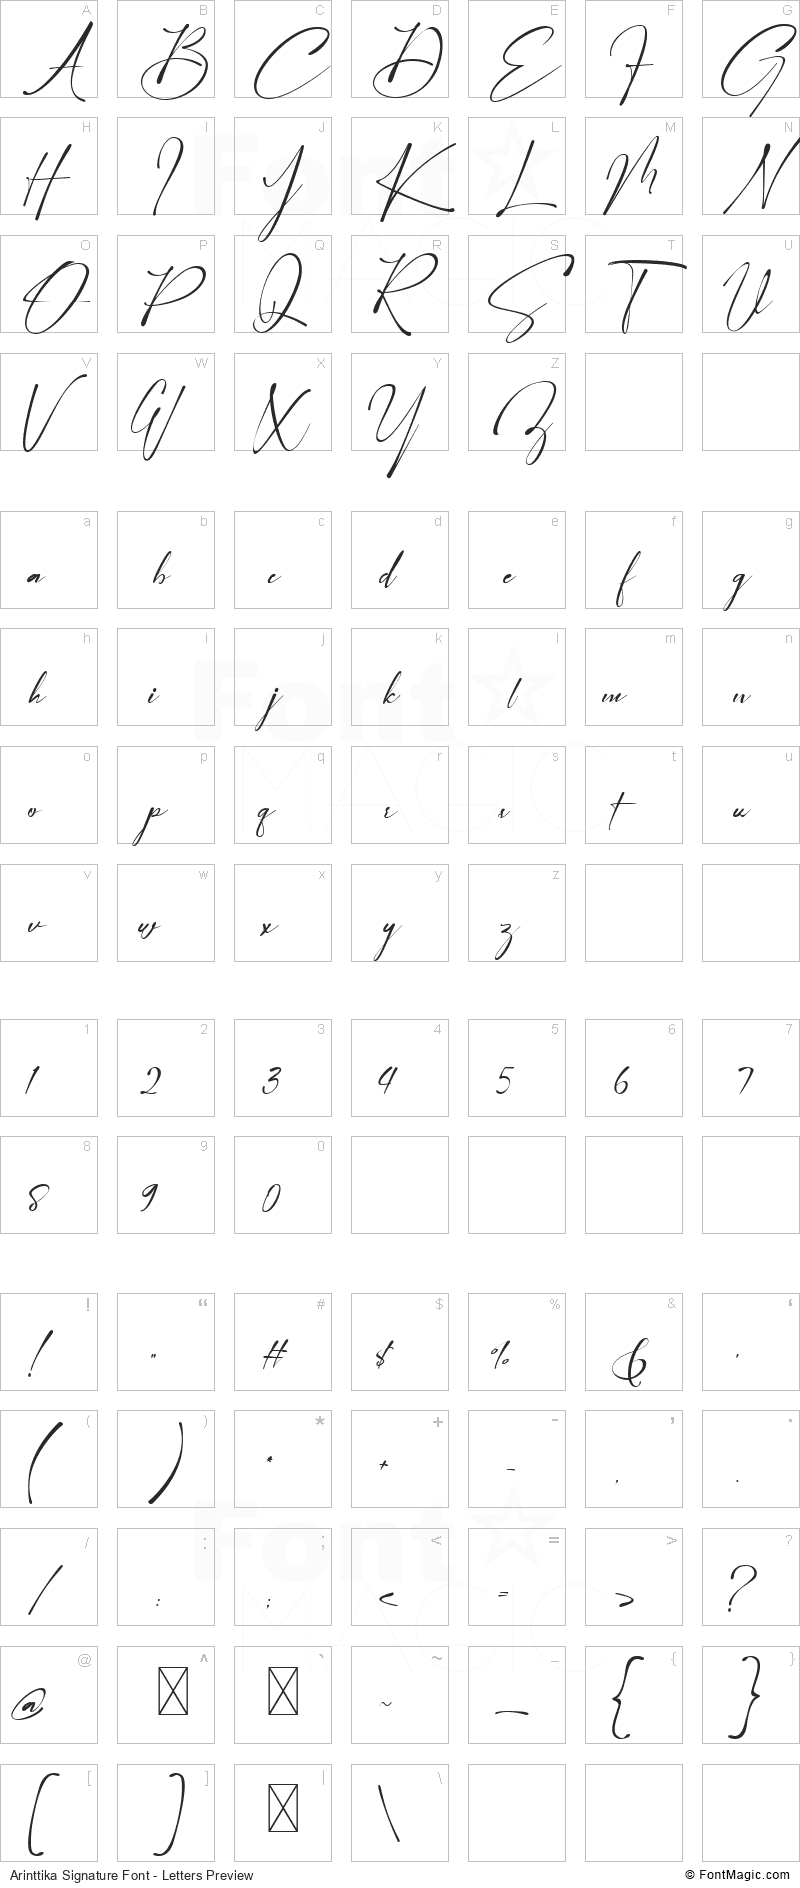 Arinttika Signature Font - All Latters Preview Chart